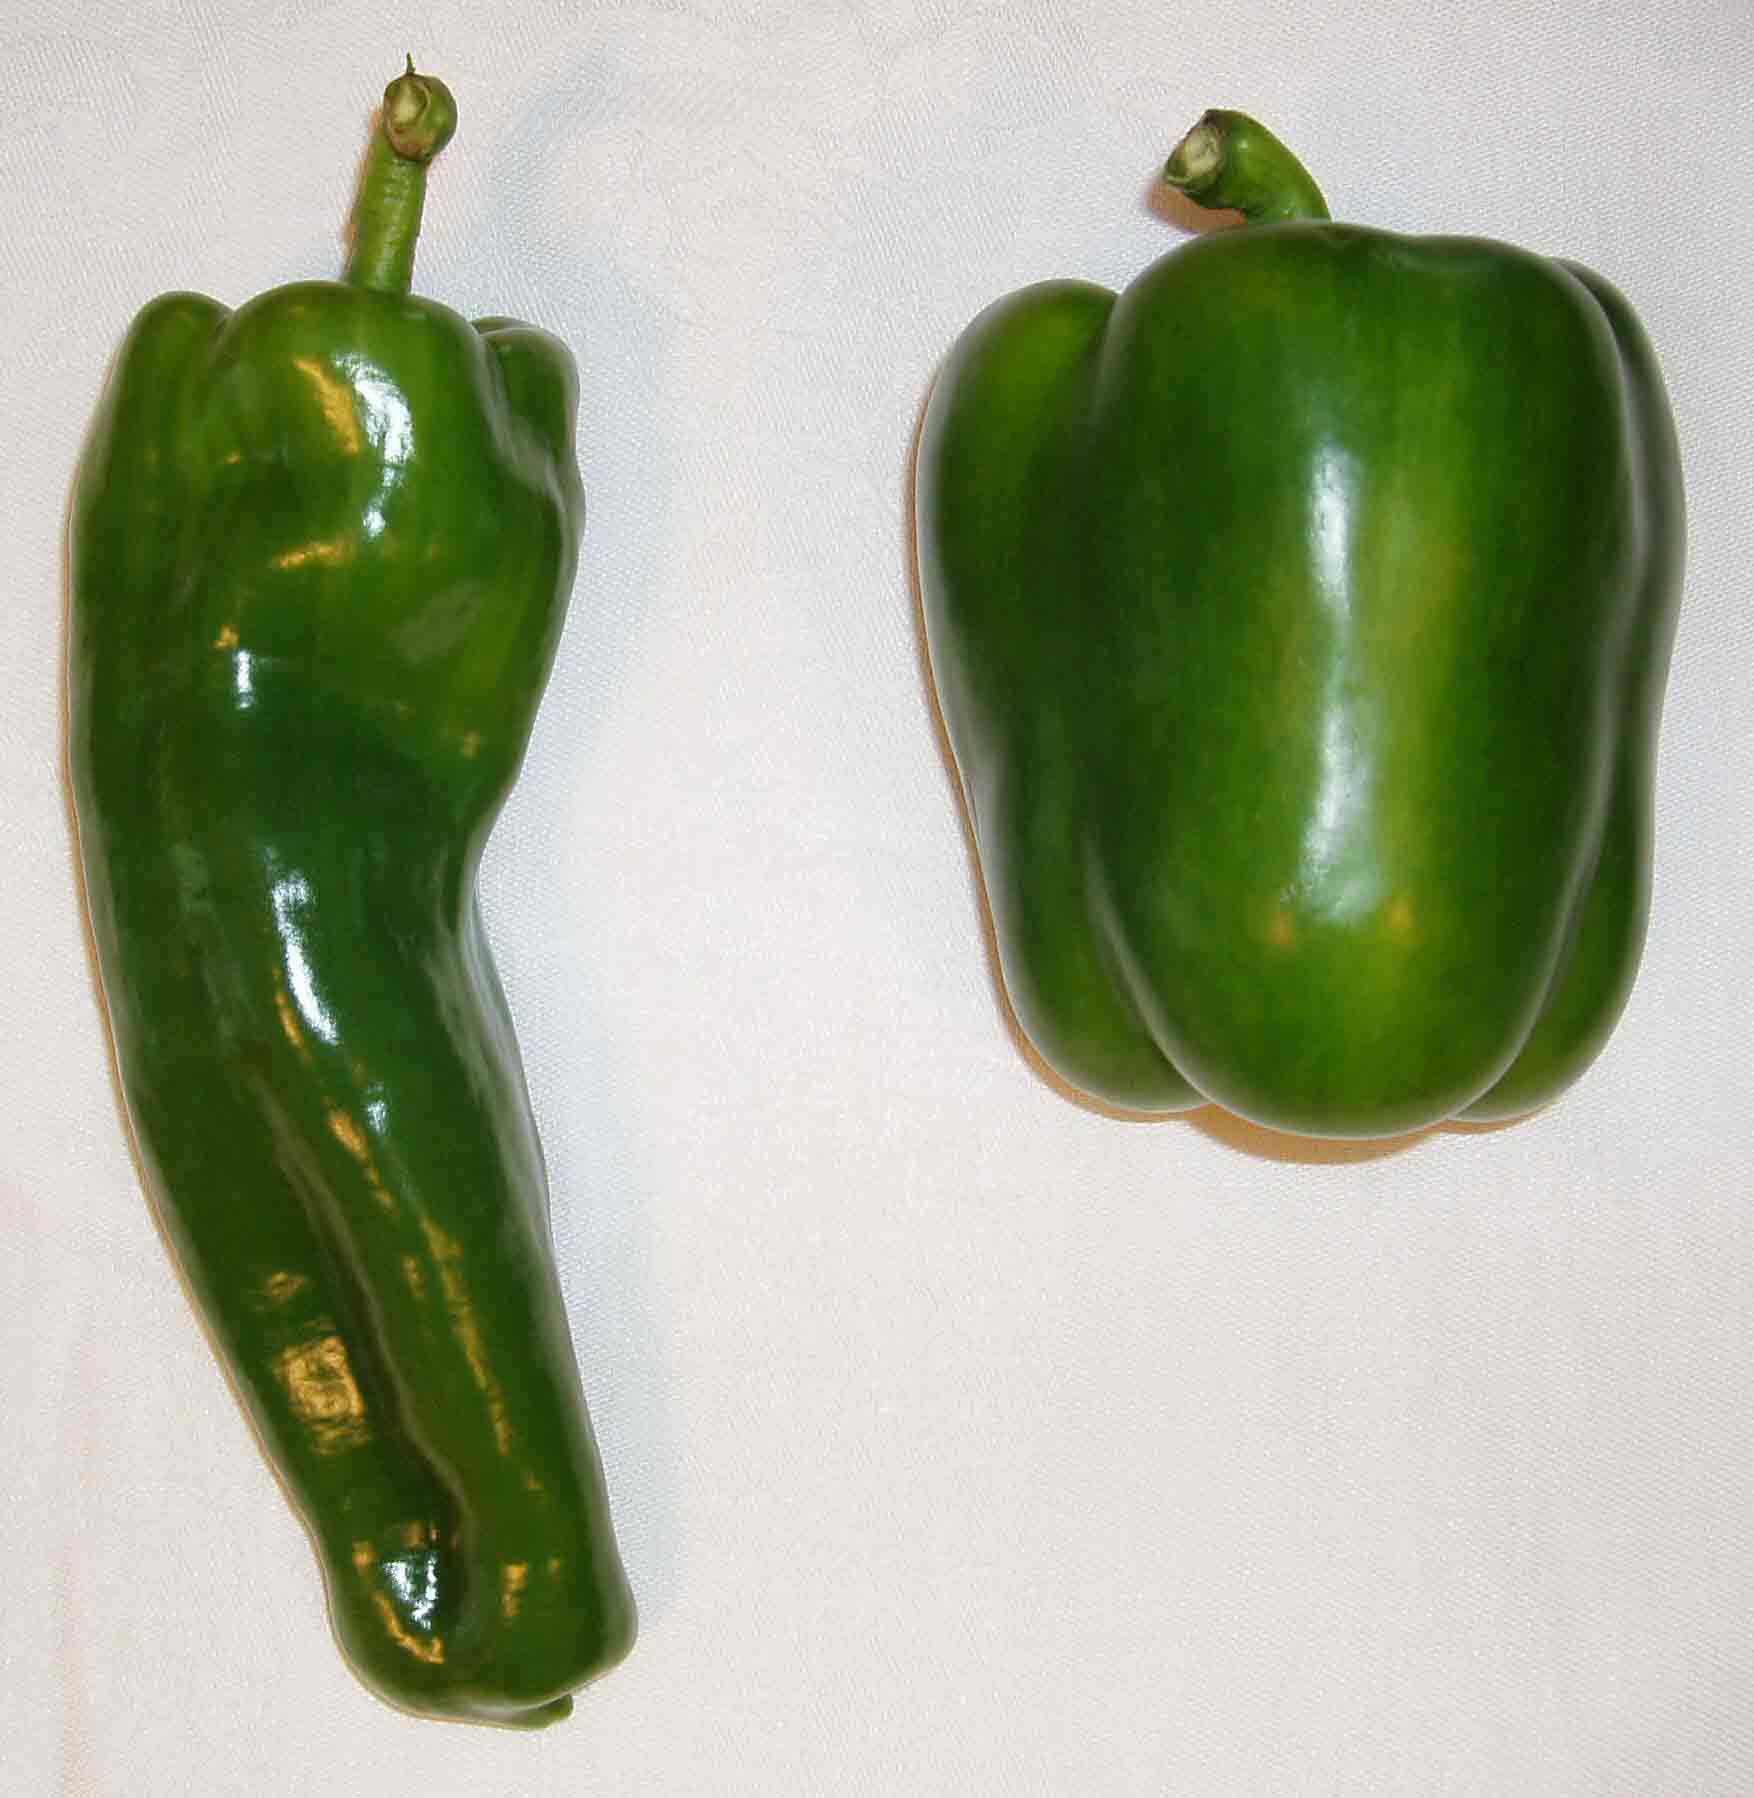 Green Pepper Identification Chart